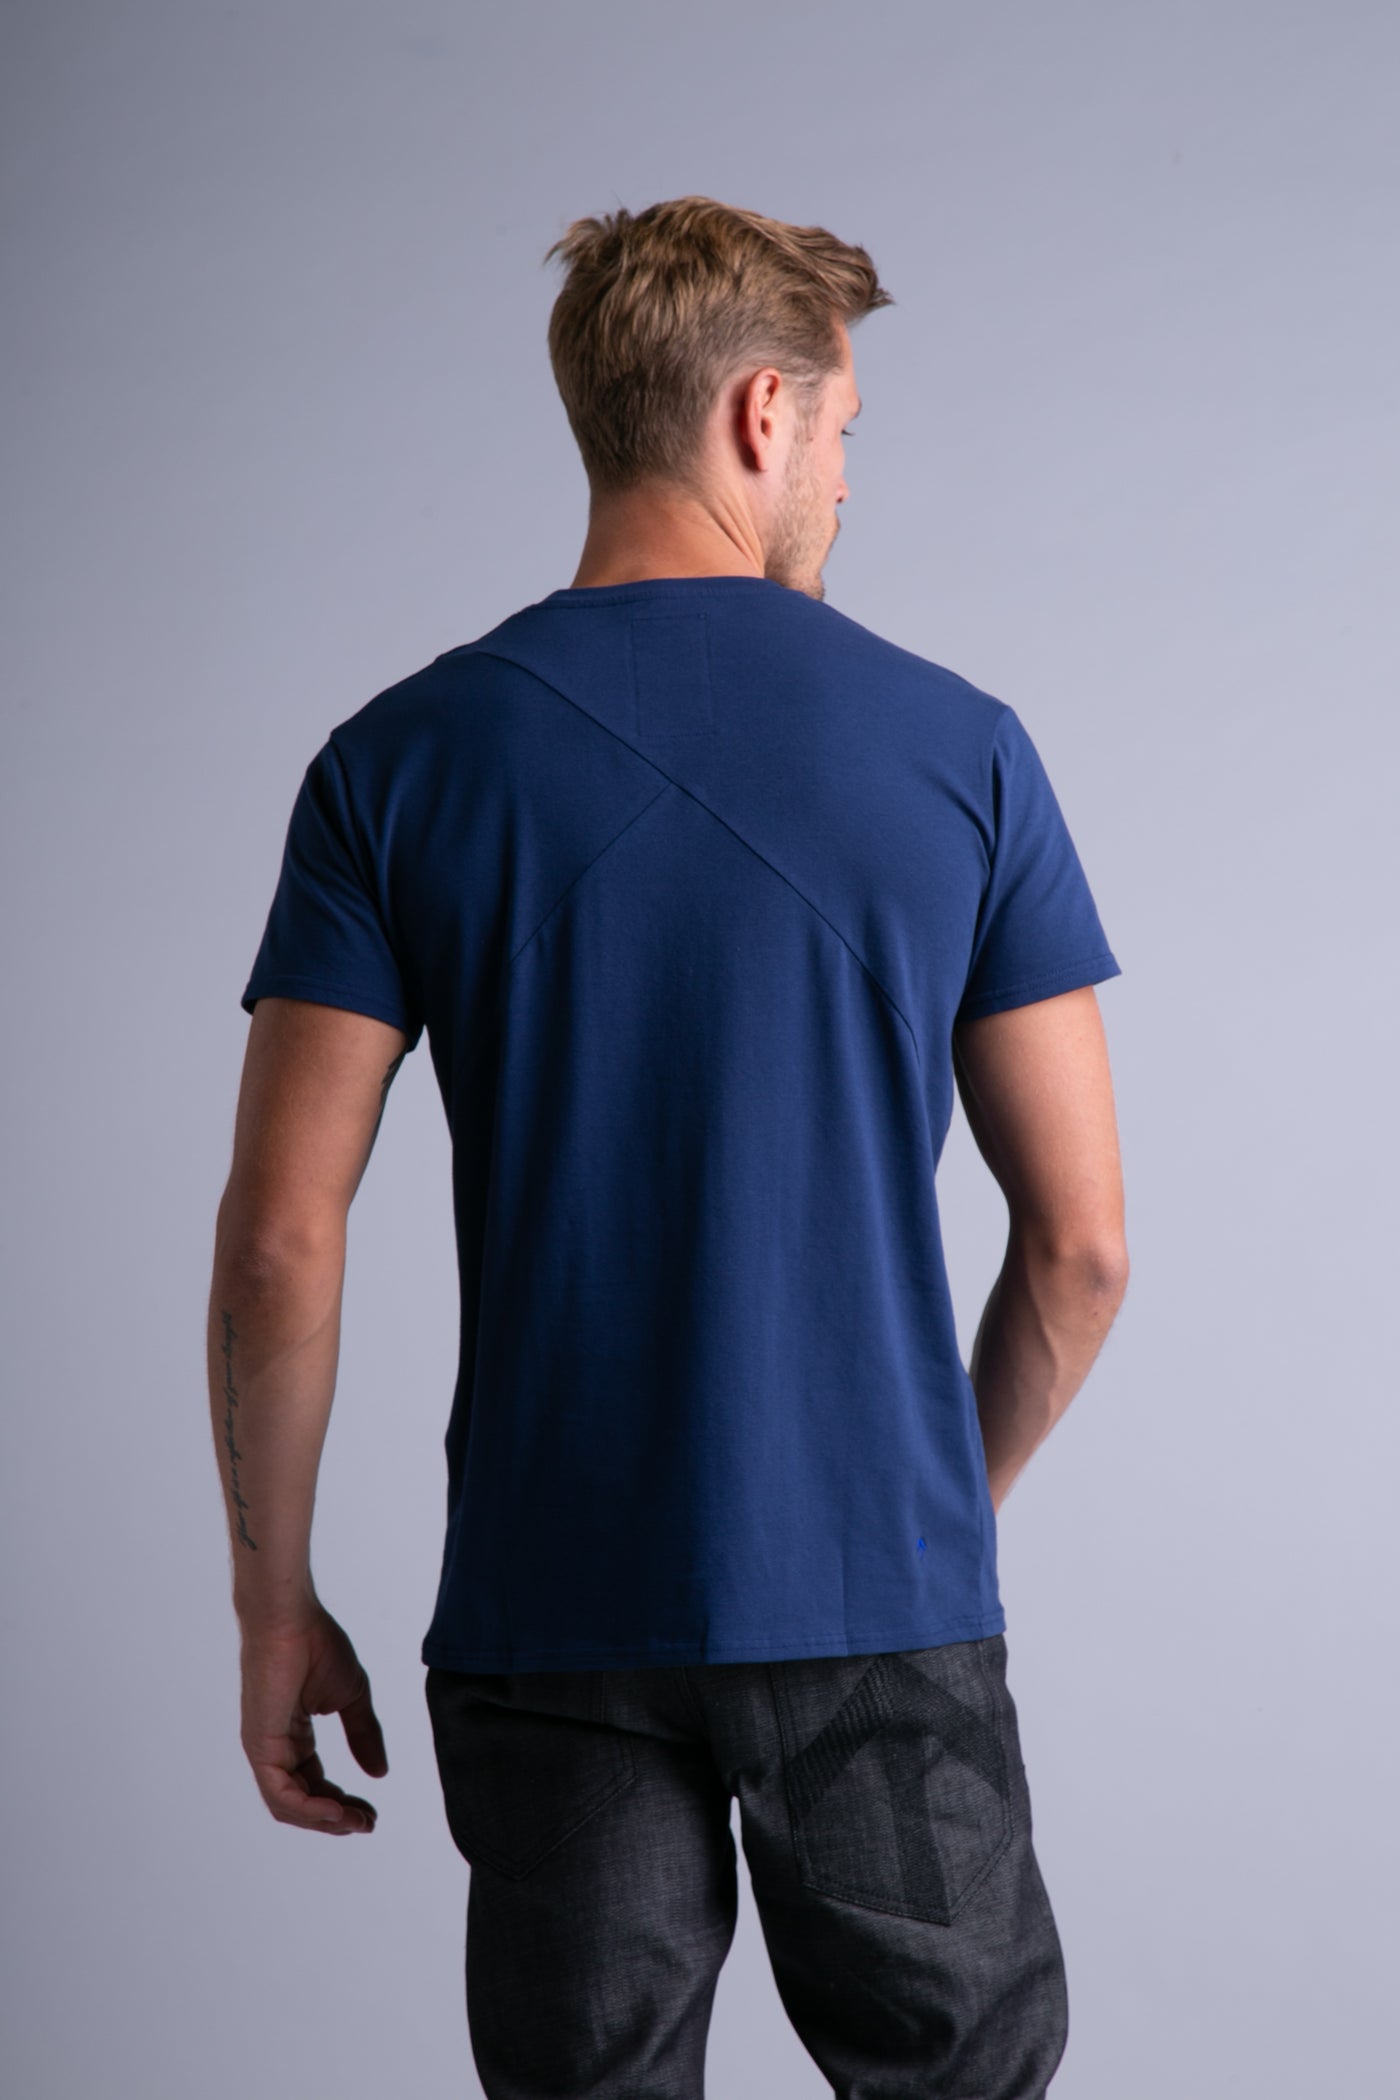 Up-shirt for men | Dark blue, grey